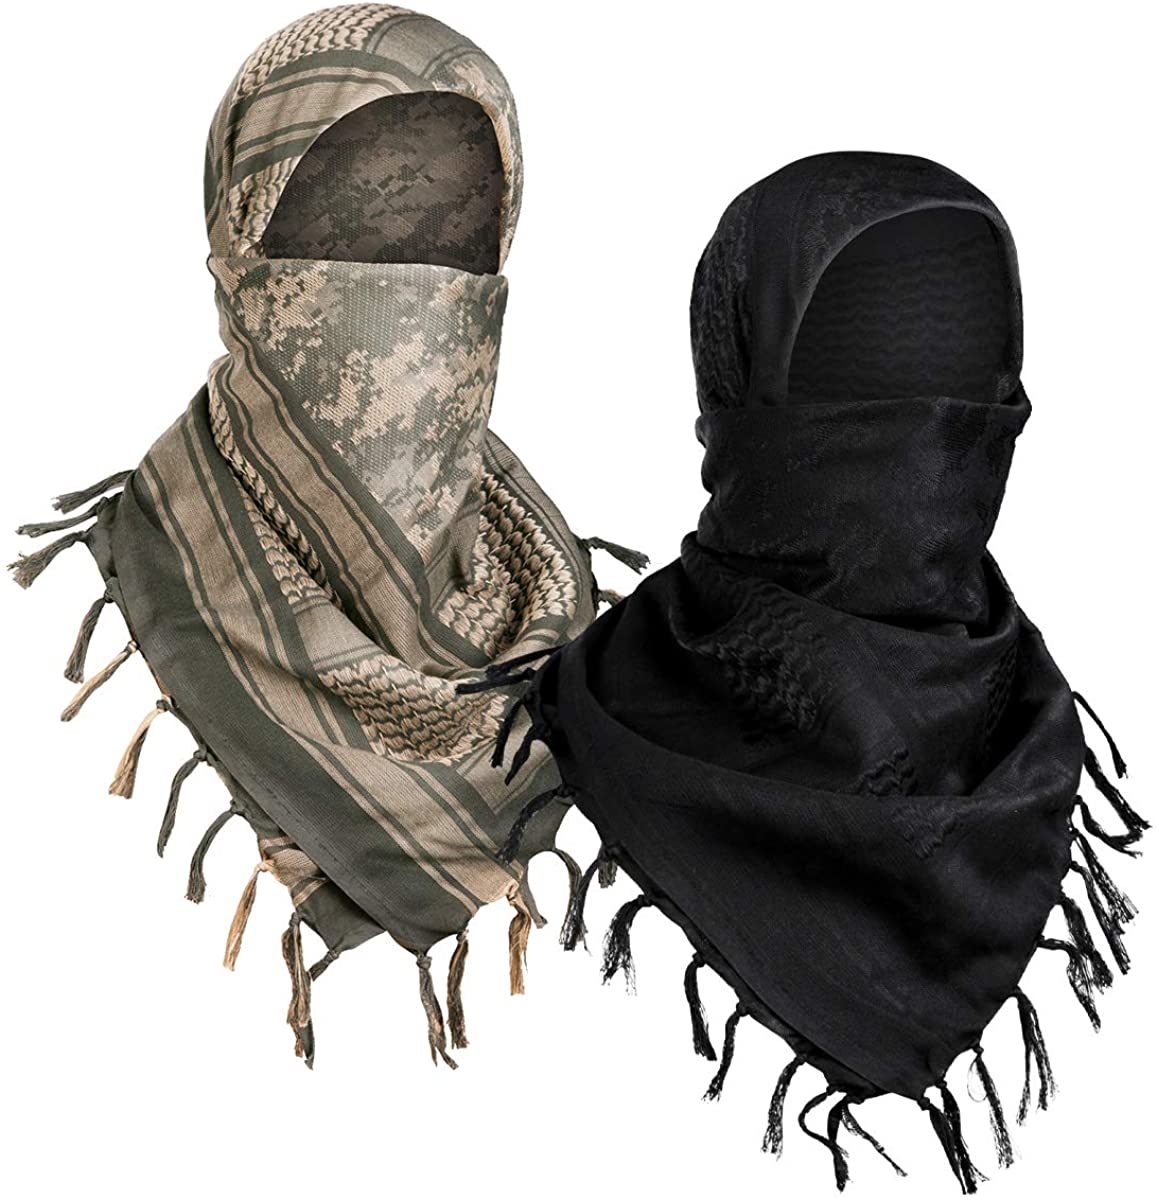 Hoolerry Arab Shemagh Muslim Keffiyeh Head Wrap Scarf Tactical Desert Neck Headwear with Aqel Rope for Men Women, 55x55 inch